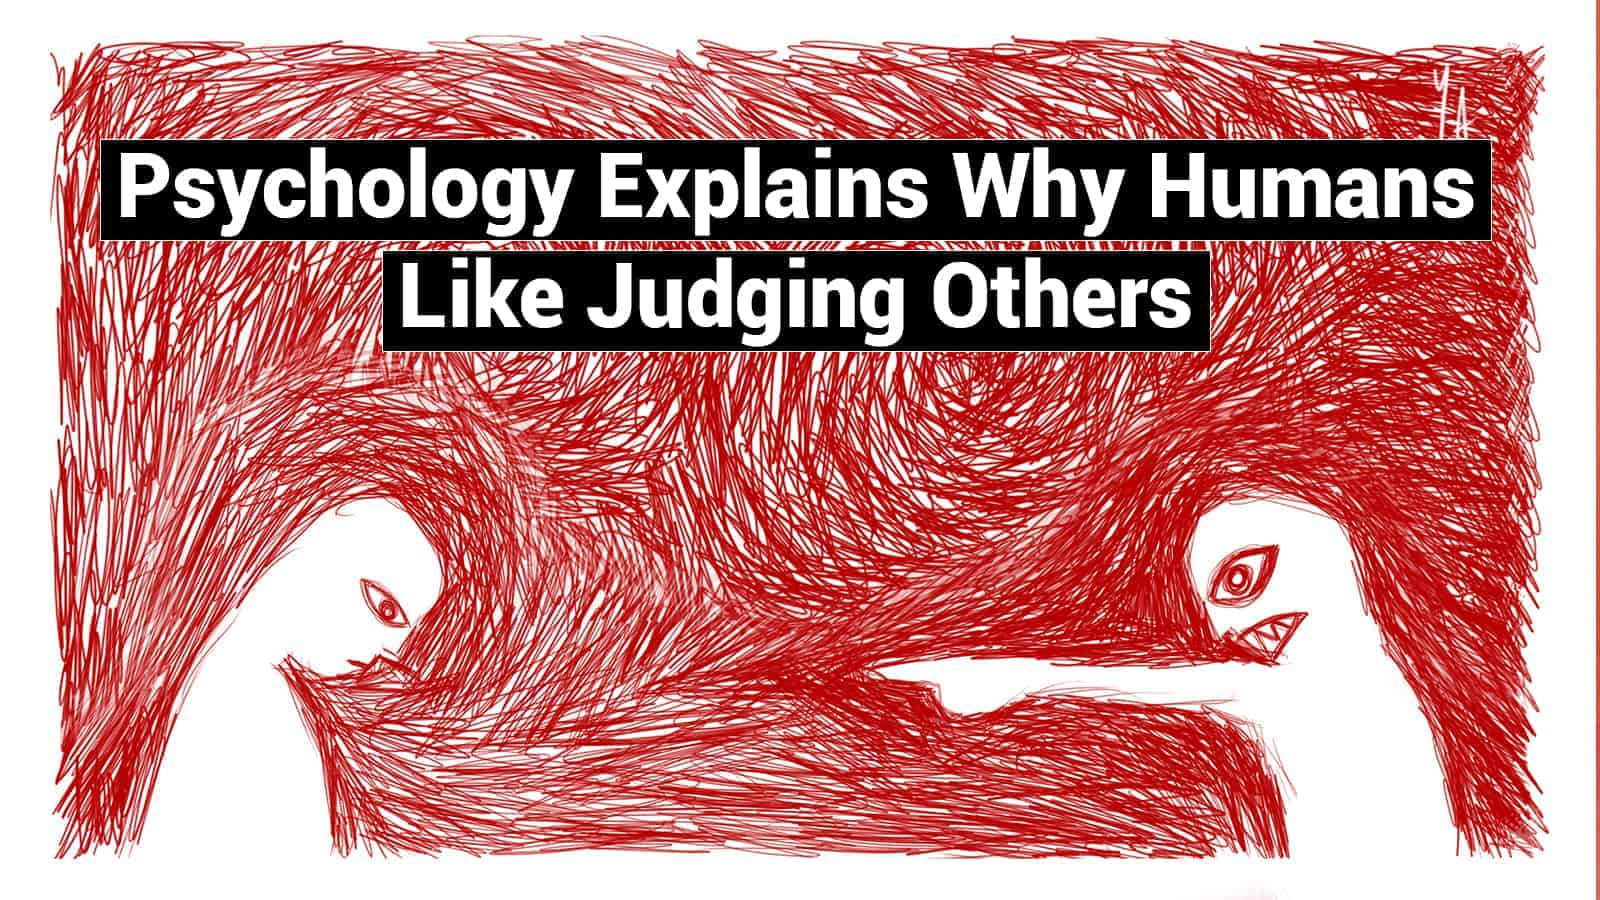 Psychology Explains Why Humans Like Judging Others